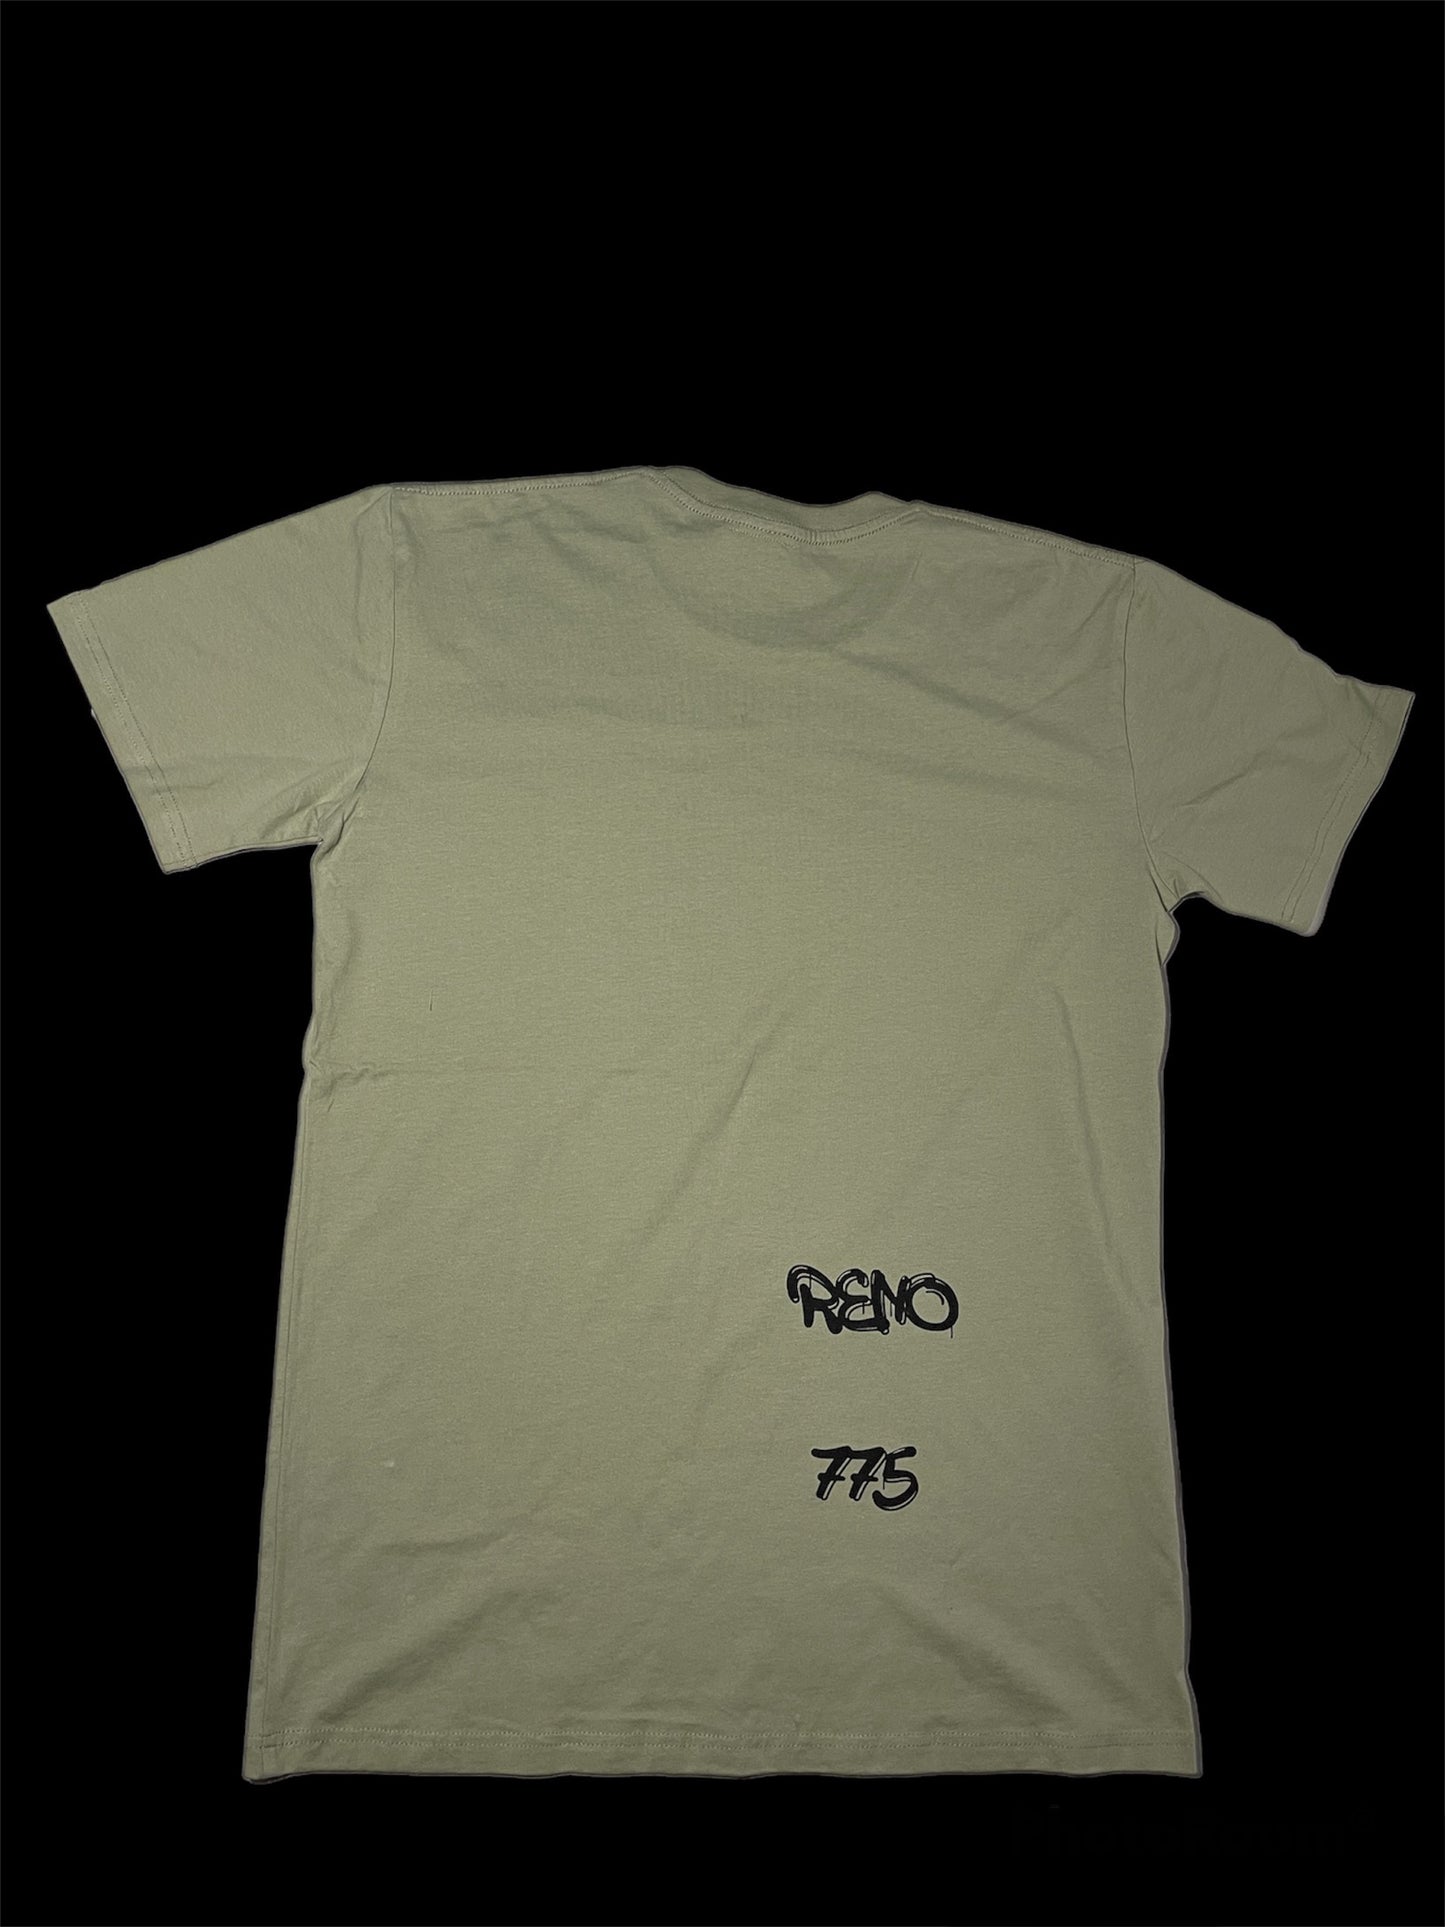 “775” Tee Shirt